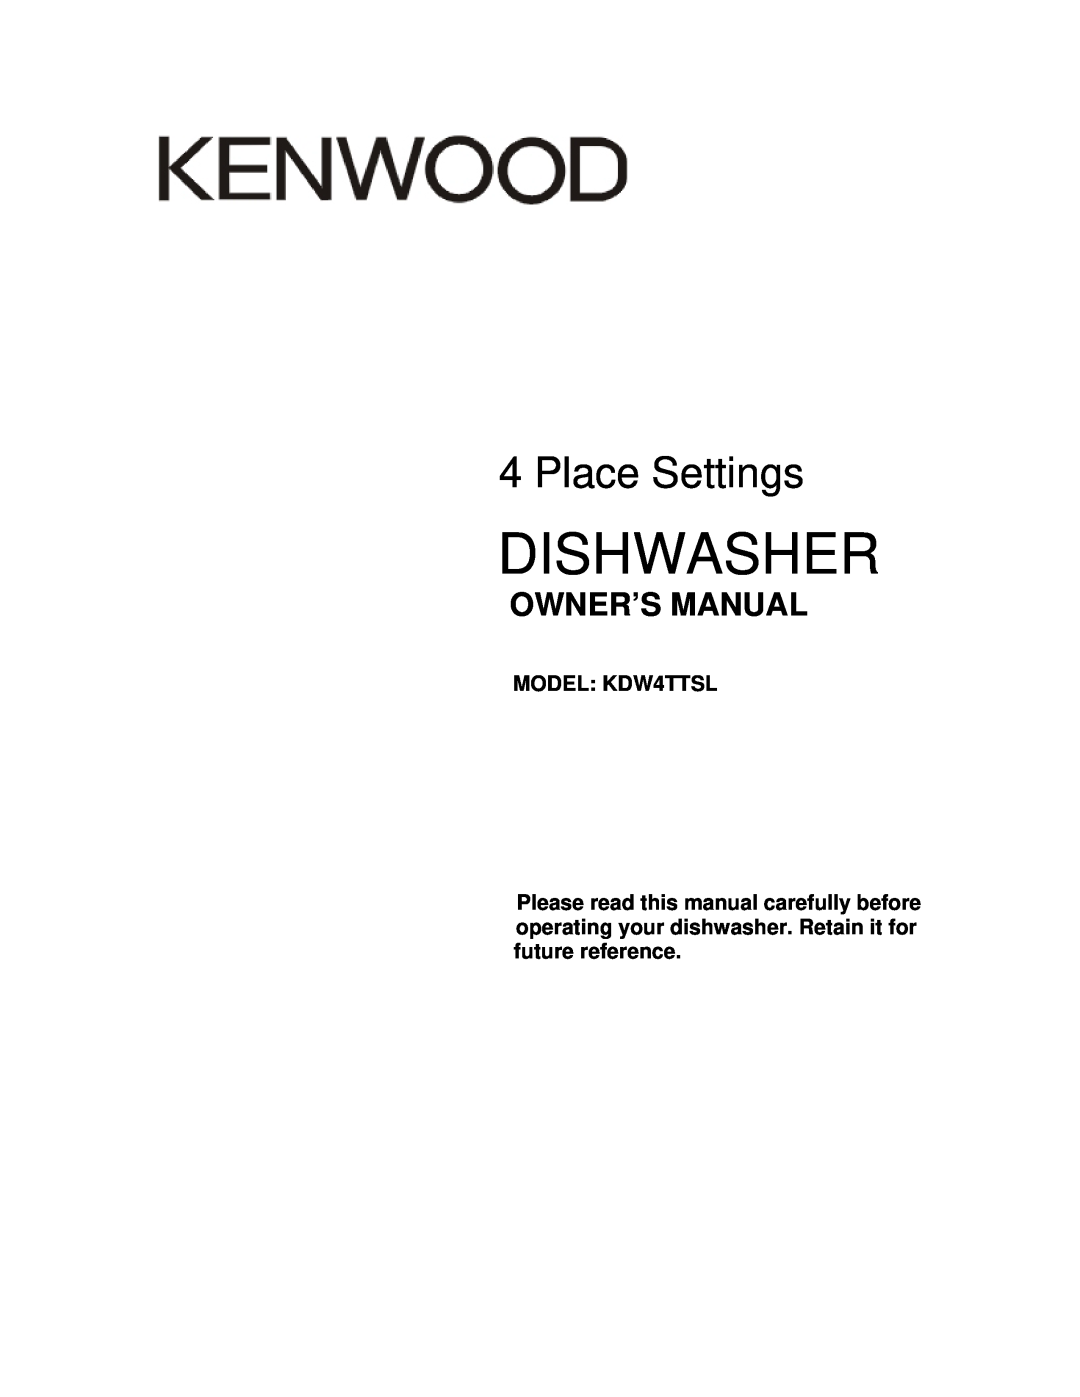 Kenwood owner manual MODEL KDW4TTSL, Dishwasher, Place Settings 